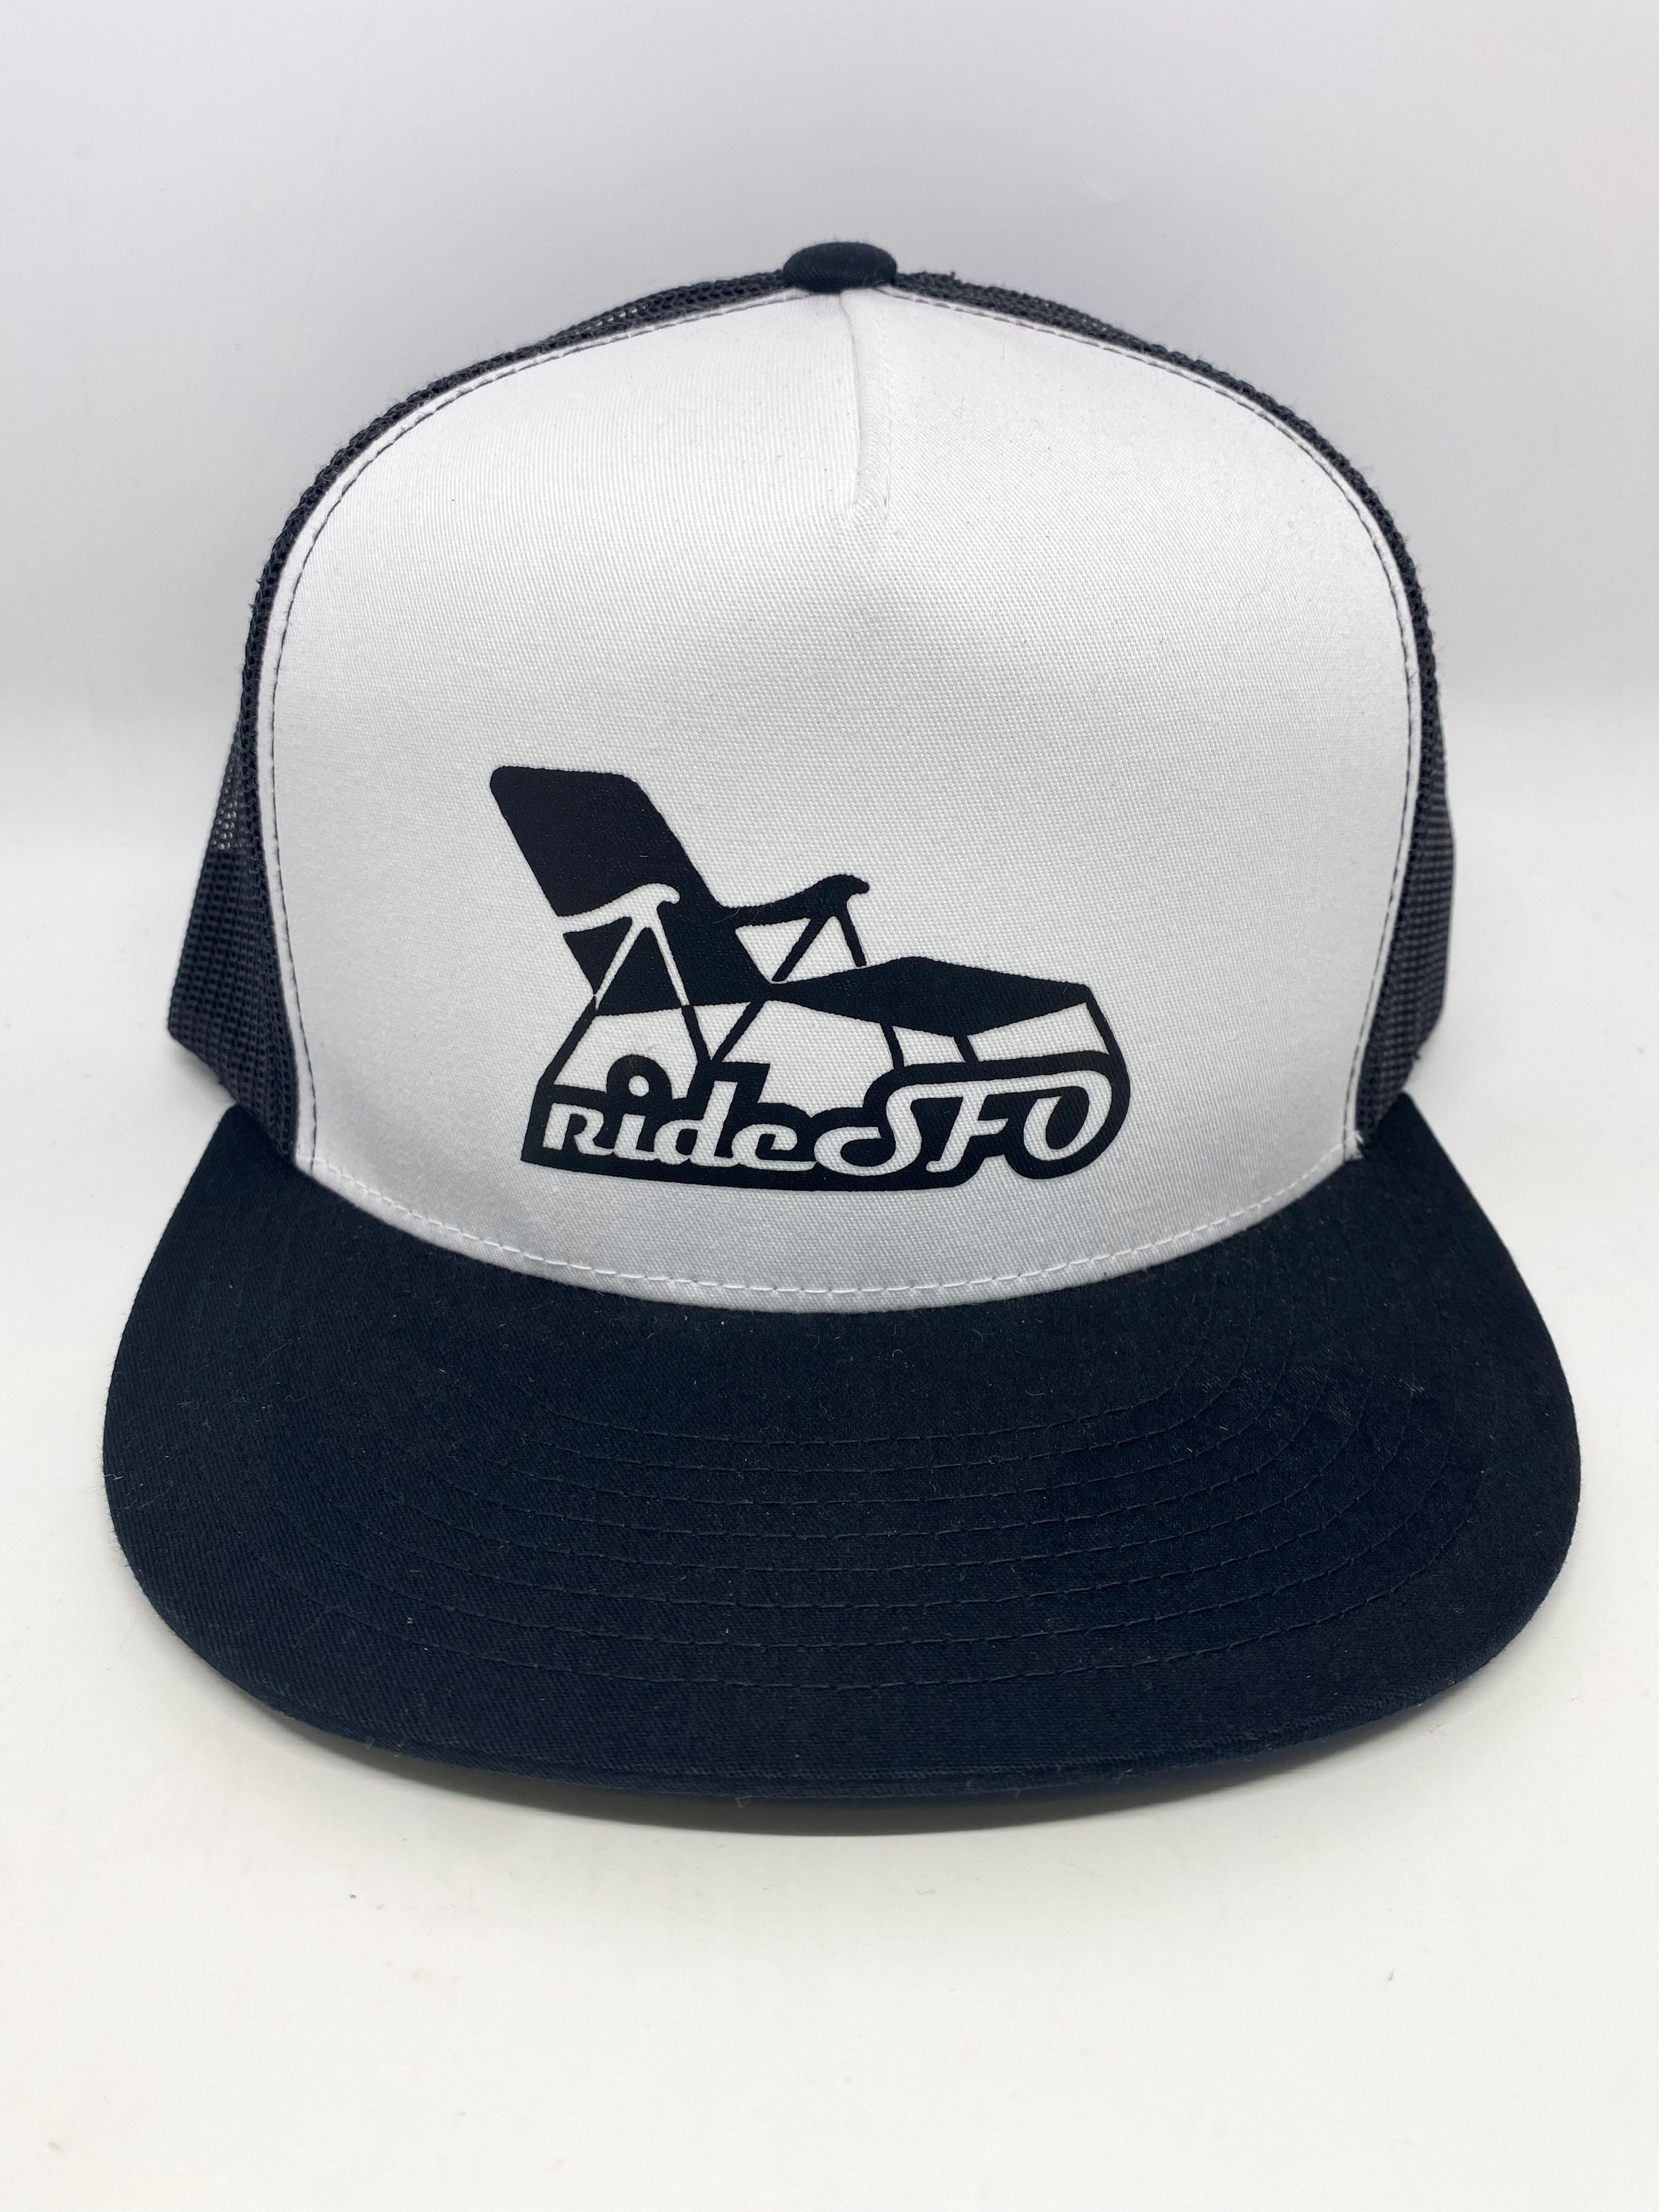 rideSFO LoungeChairLife Logo Snapback Hat Black/White